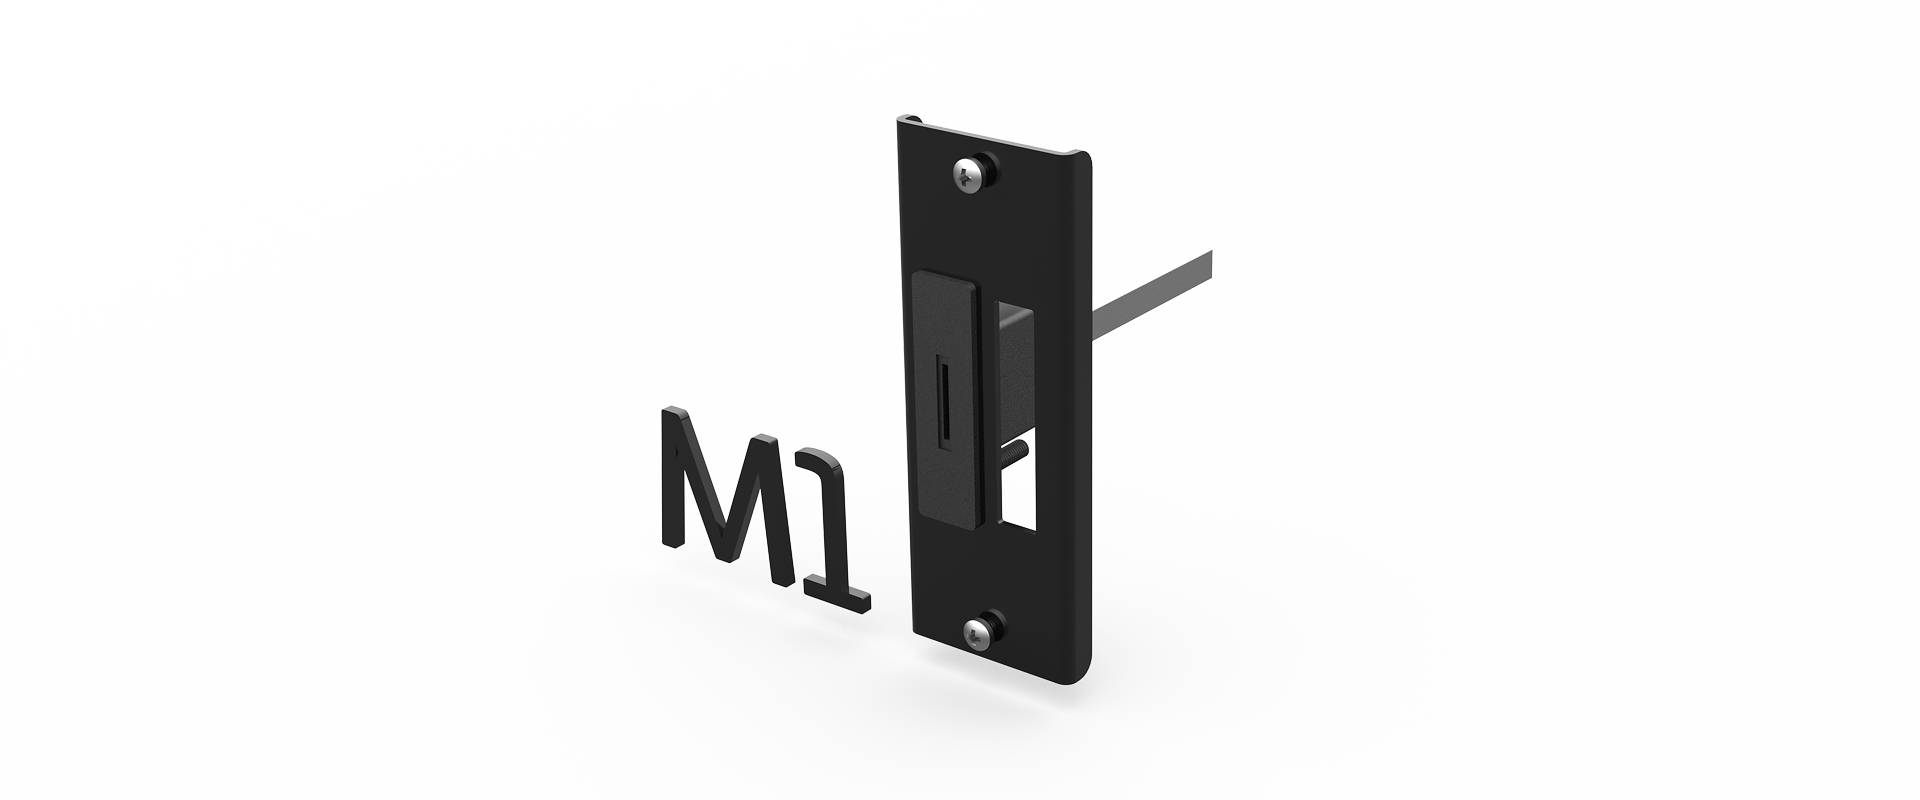 Insert M1 - MicroSD